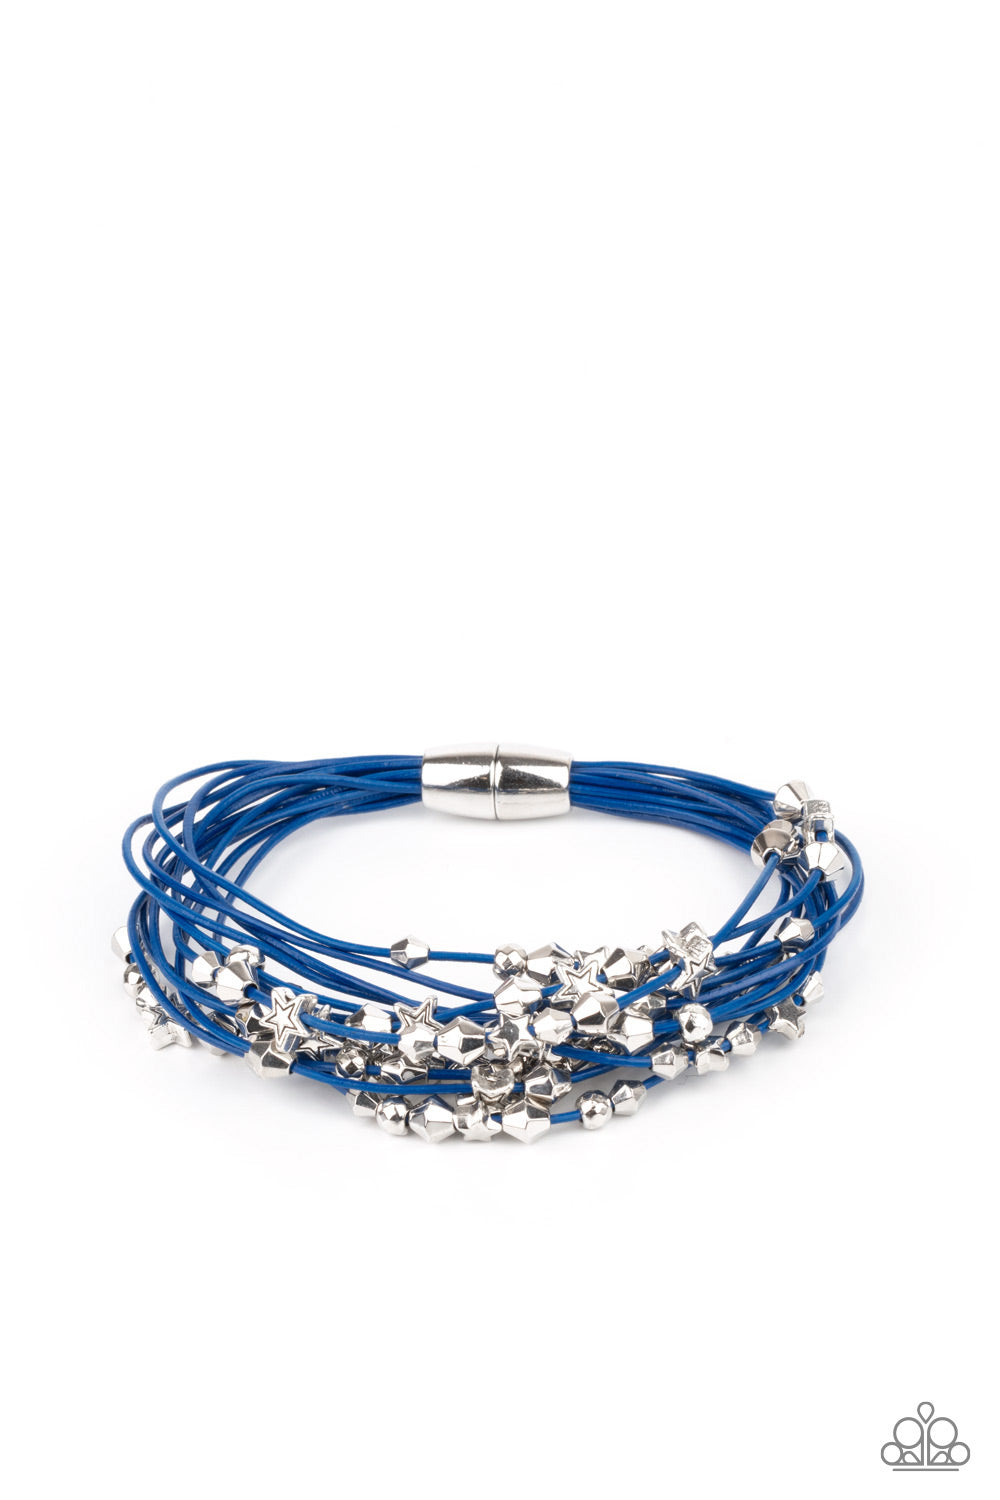 Paparazzi Accessories Star-Studded Affair - Blue Bracelets - Lady T Accessories